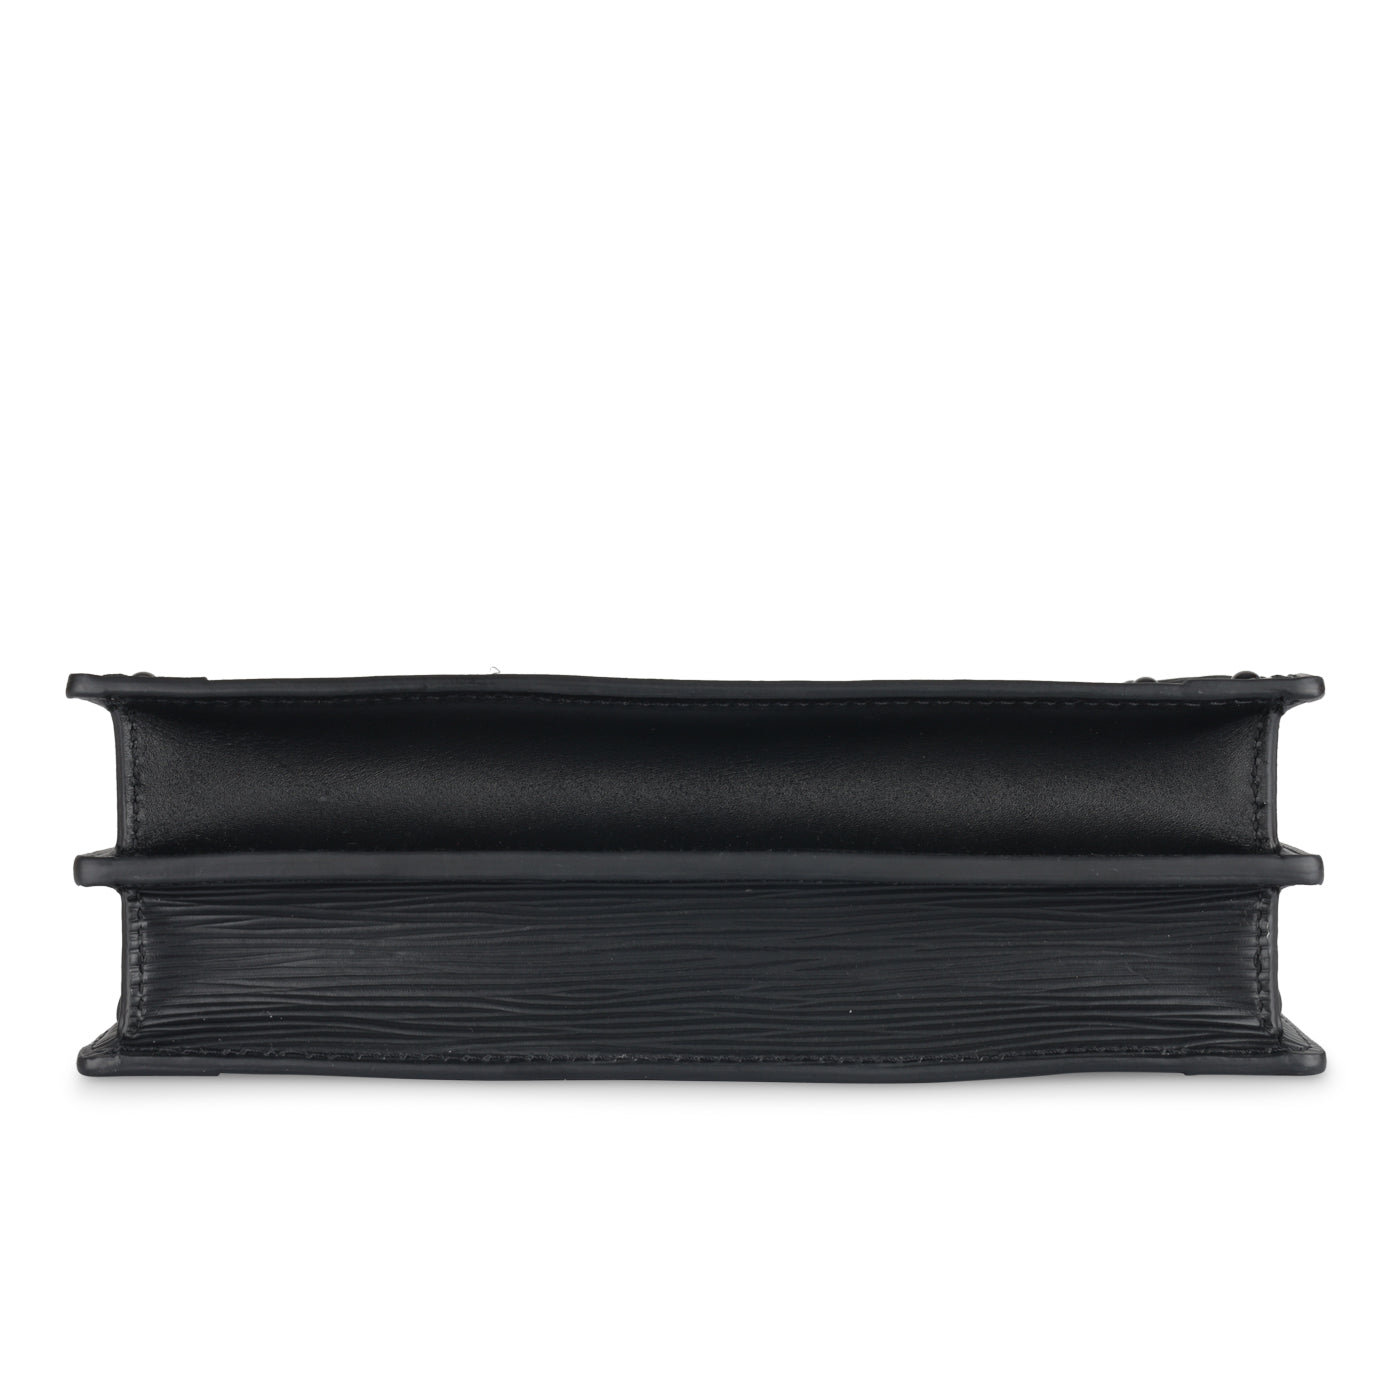 Louis Vuitton LV GHW Trunk Clutch Shoulder Bag M51698 Epi Leather Pink Black